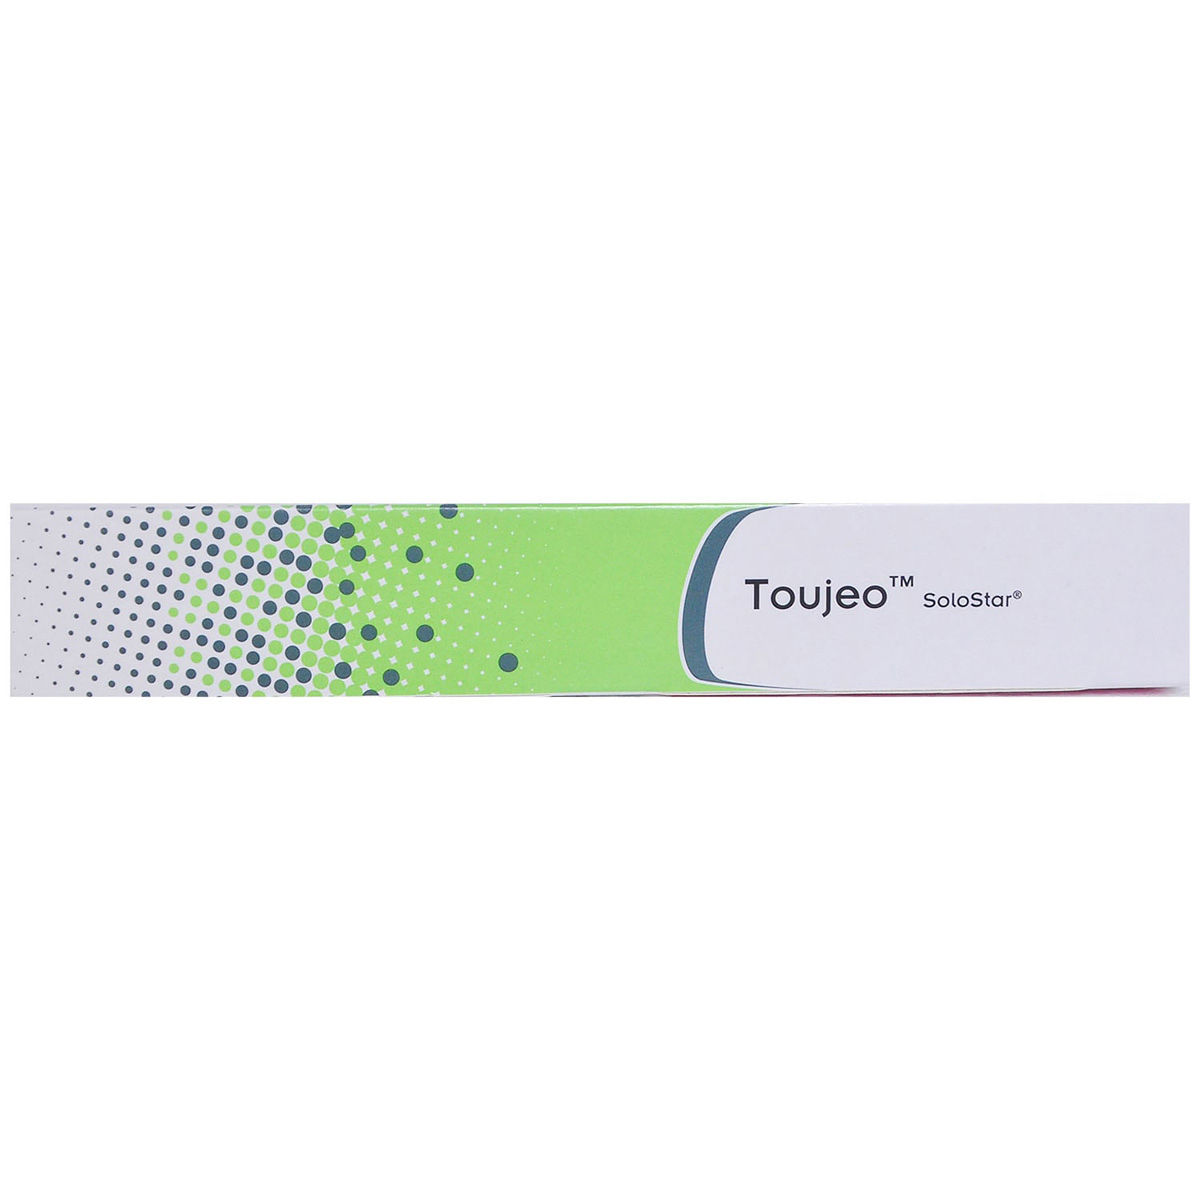 Buy Toujeo 300U/ml Solostar Injection 1.5 ml Online